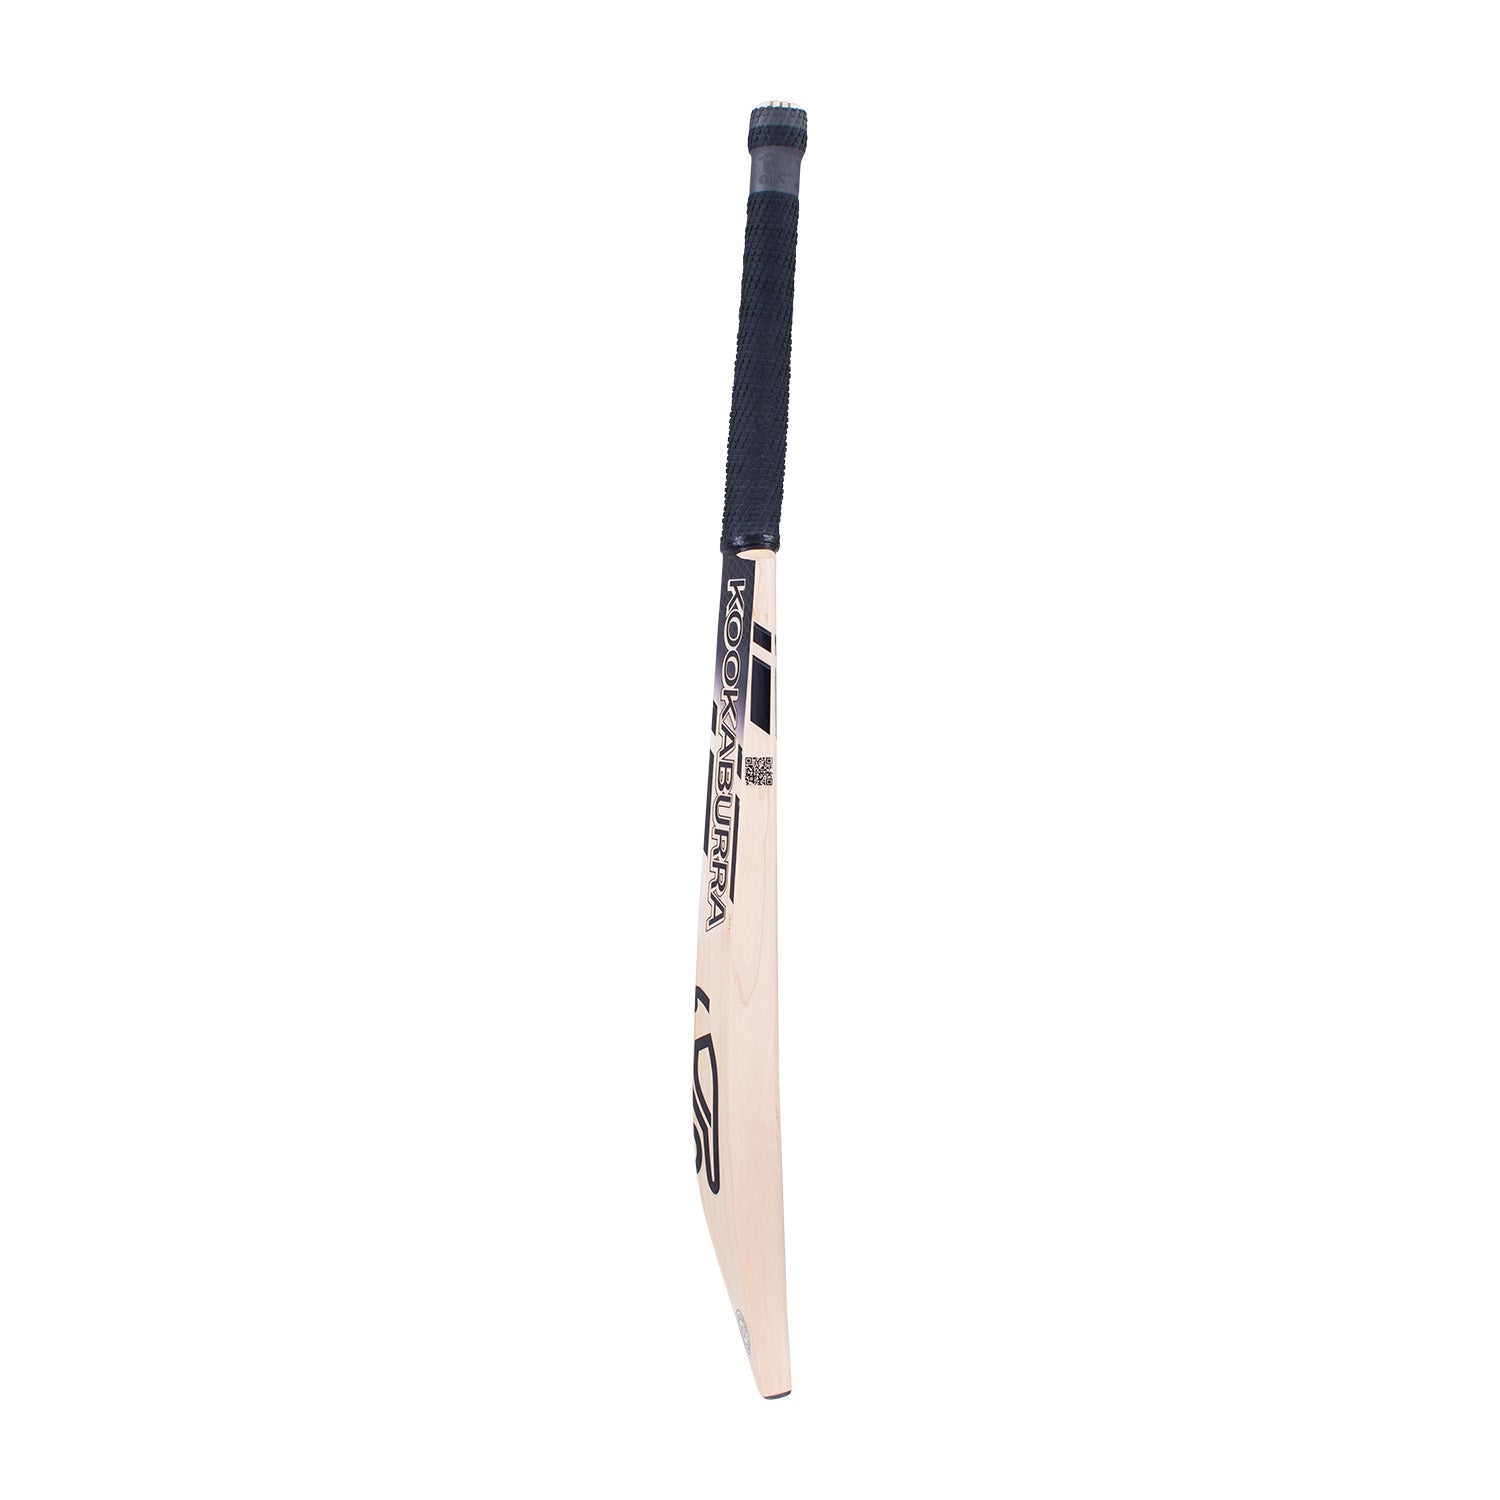 Kookaburra Stealth 3.1 Junior Cricket Bat